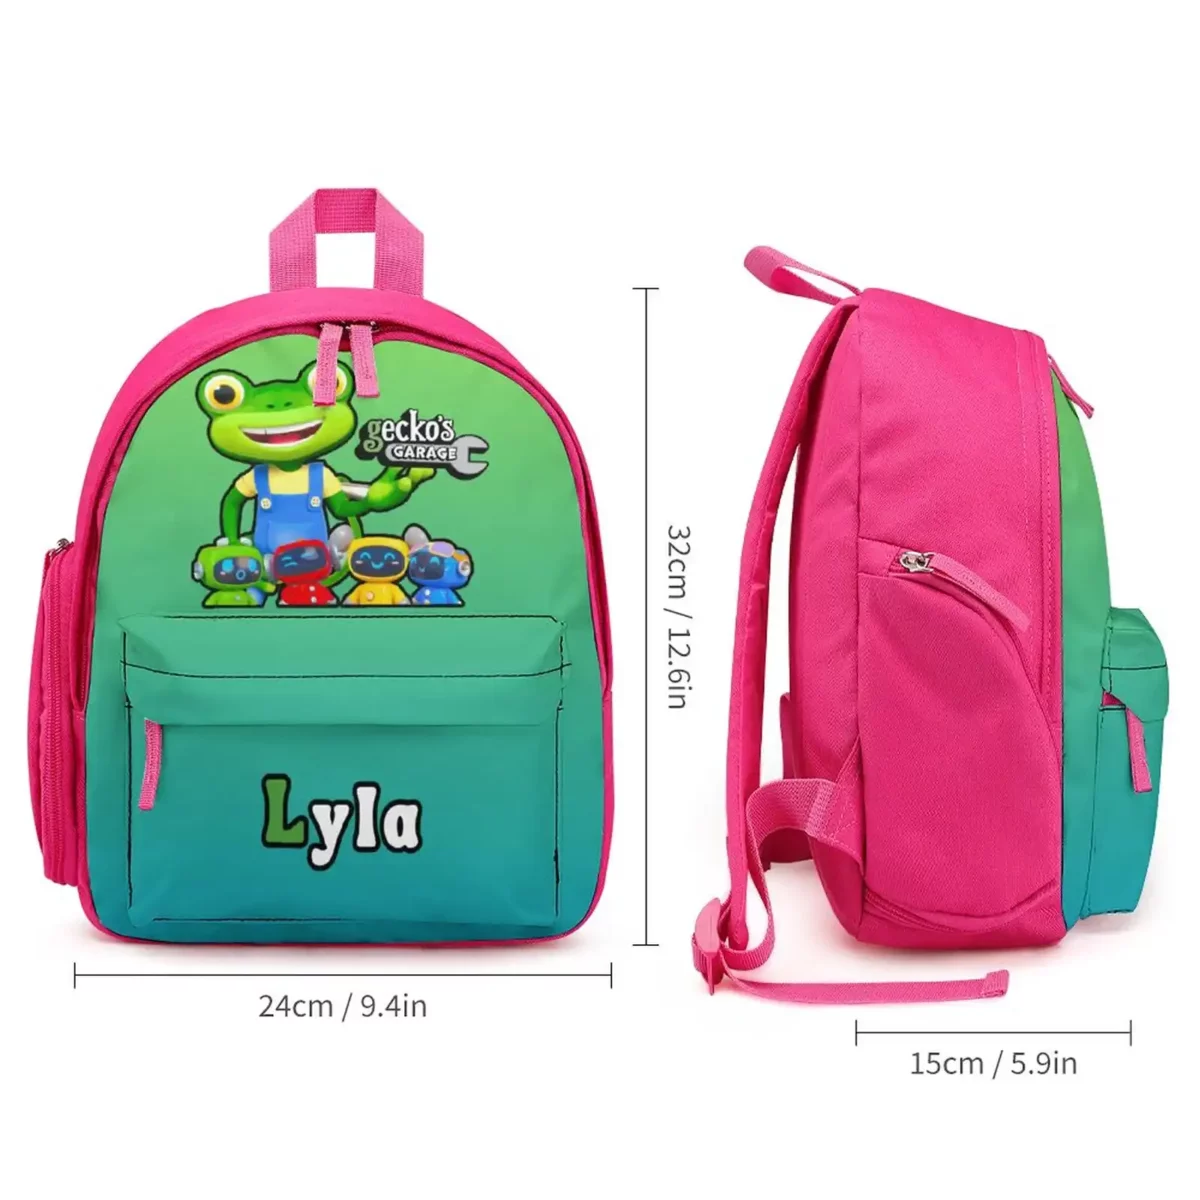 Gecko’s Garage Animated Series Character Children’s School Bag Cool Kiddo 16